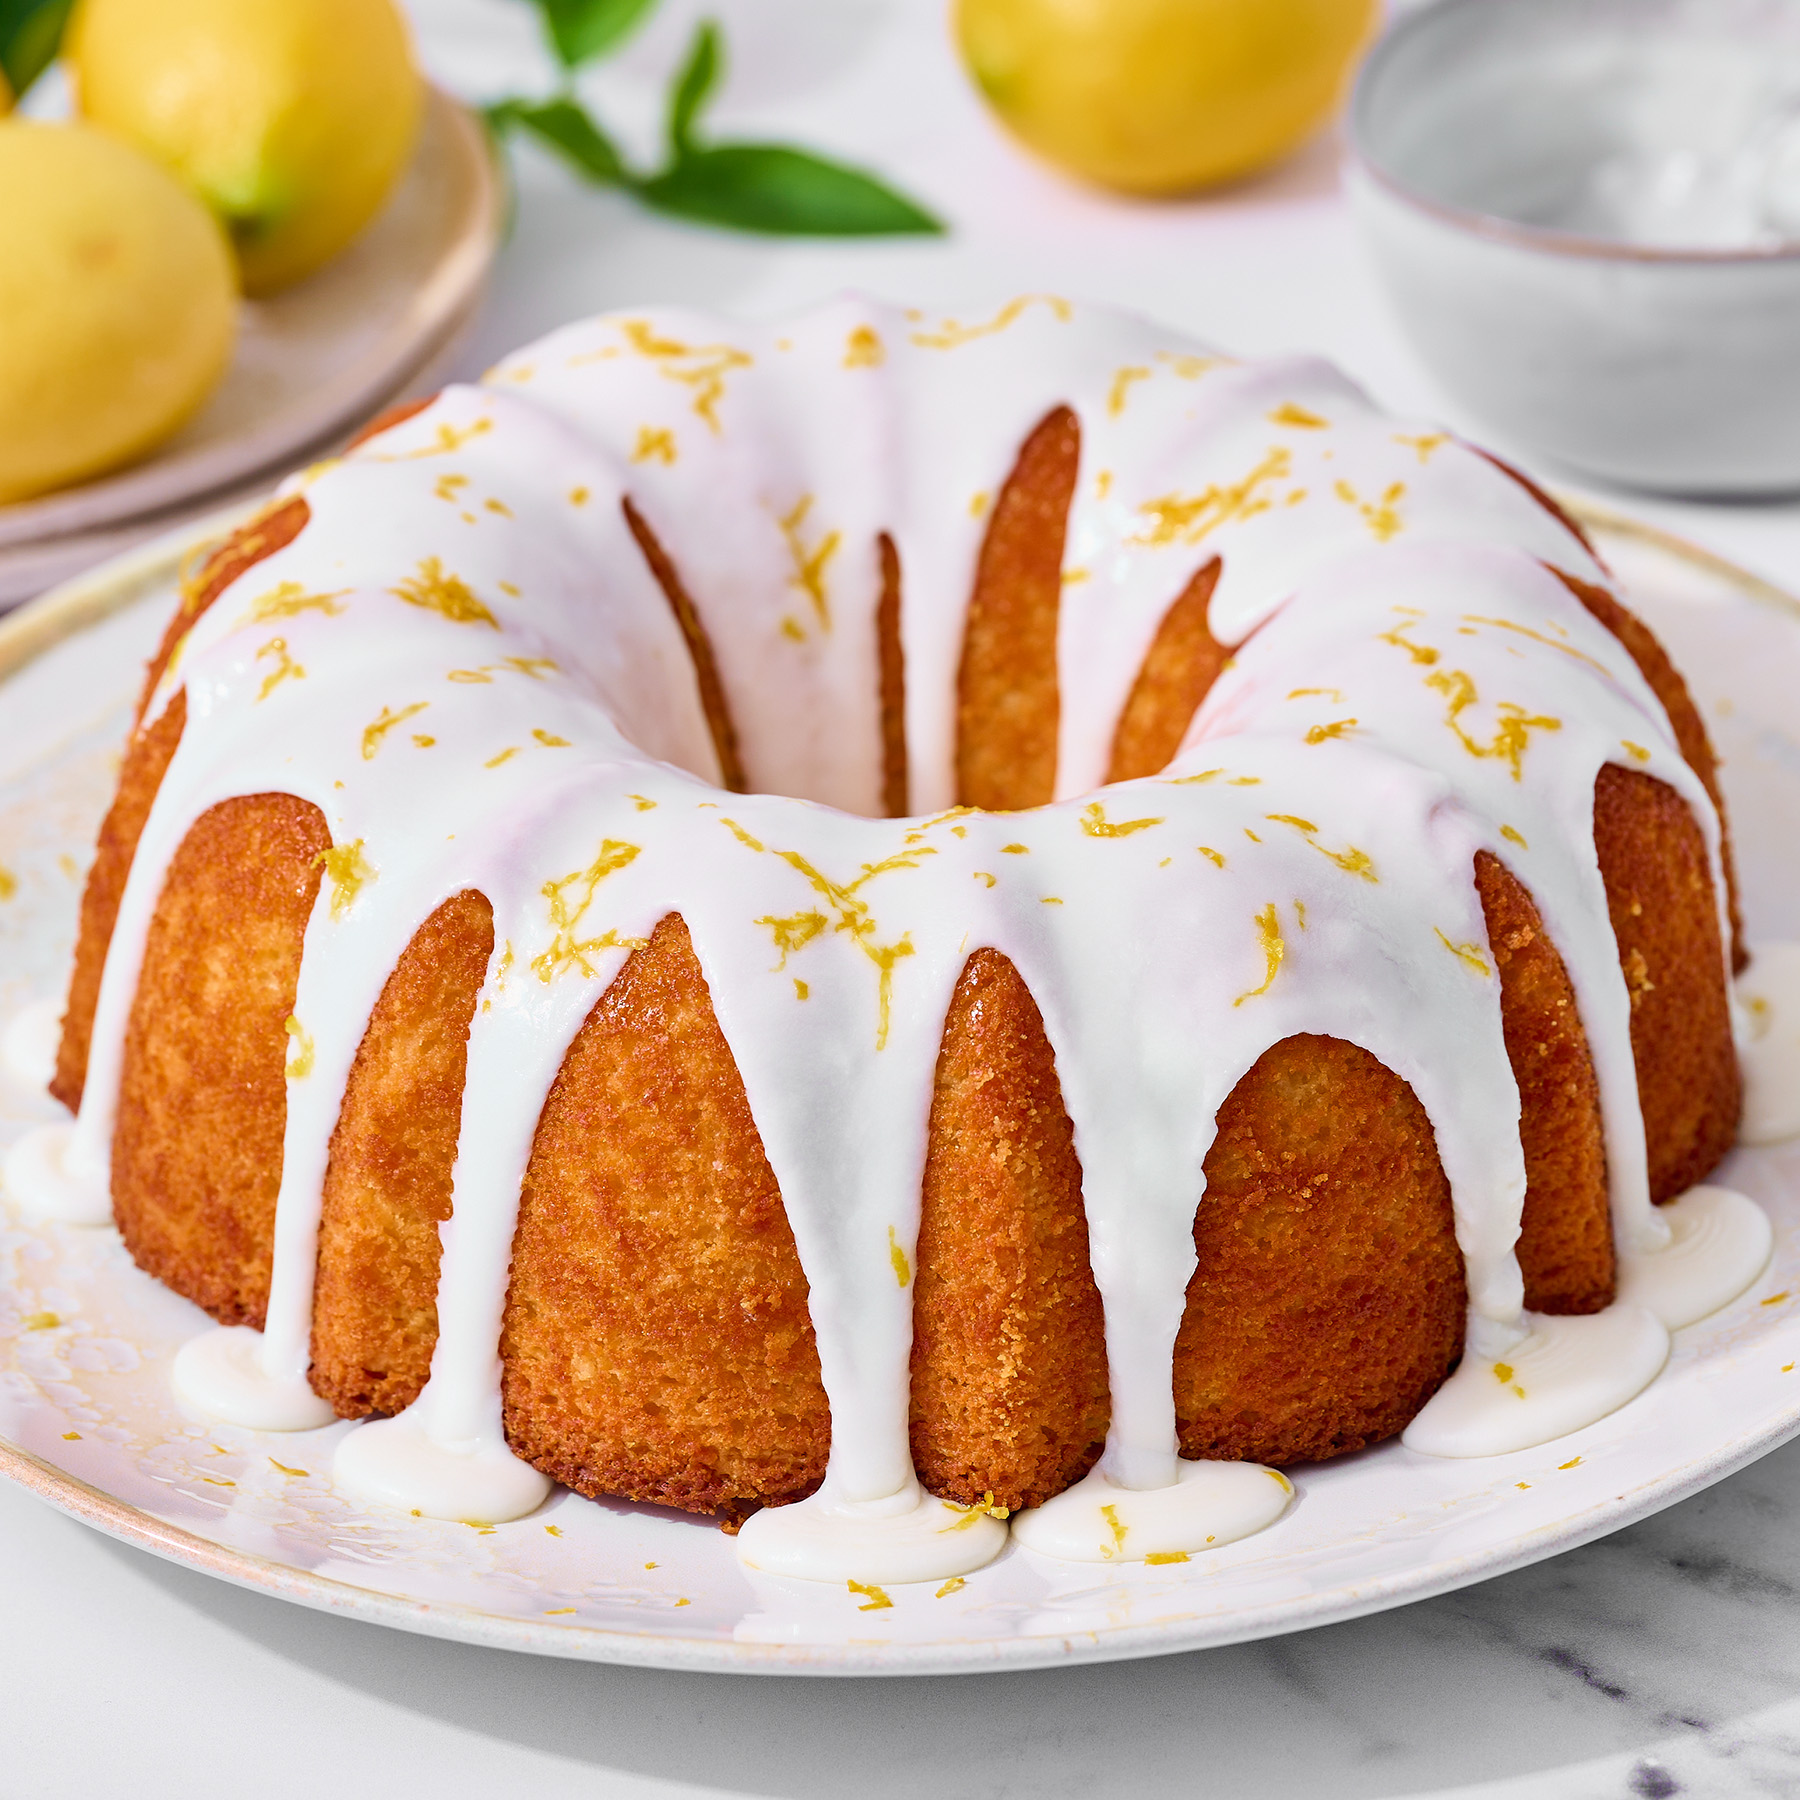 https://handletheheat.com/wp-content/uploads/2018/01/lemon-bundt-cake-recipe-SQUARE.jpg